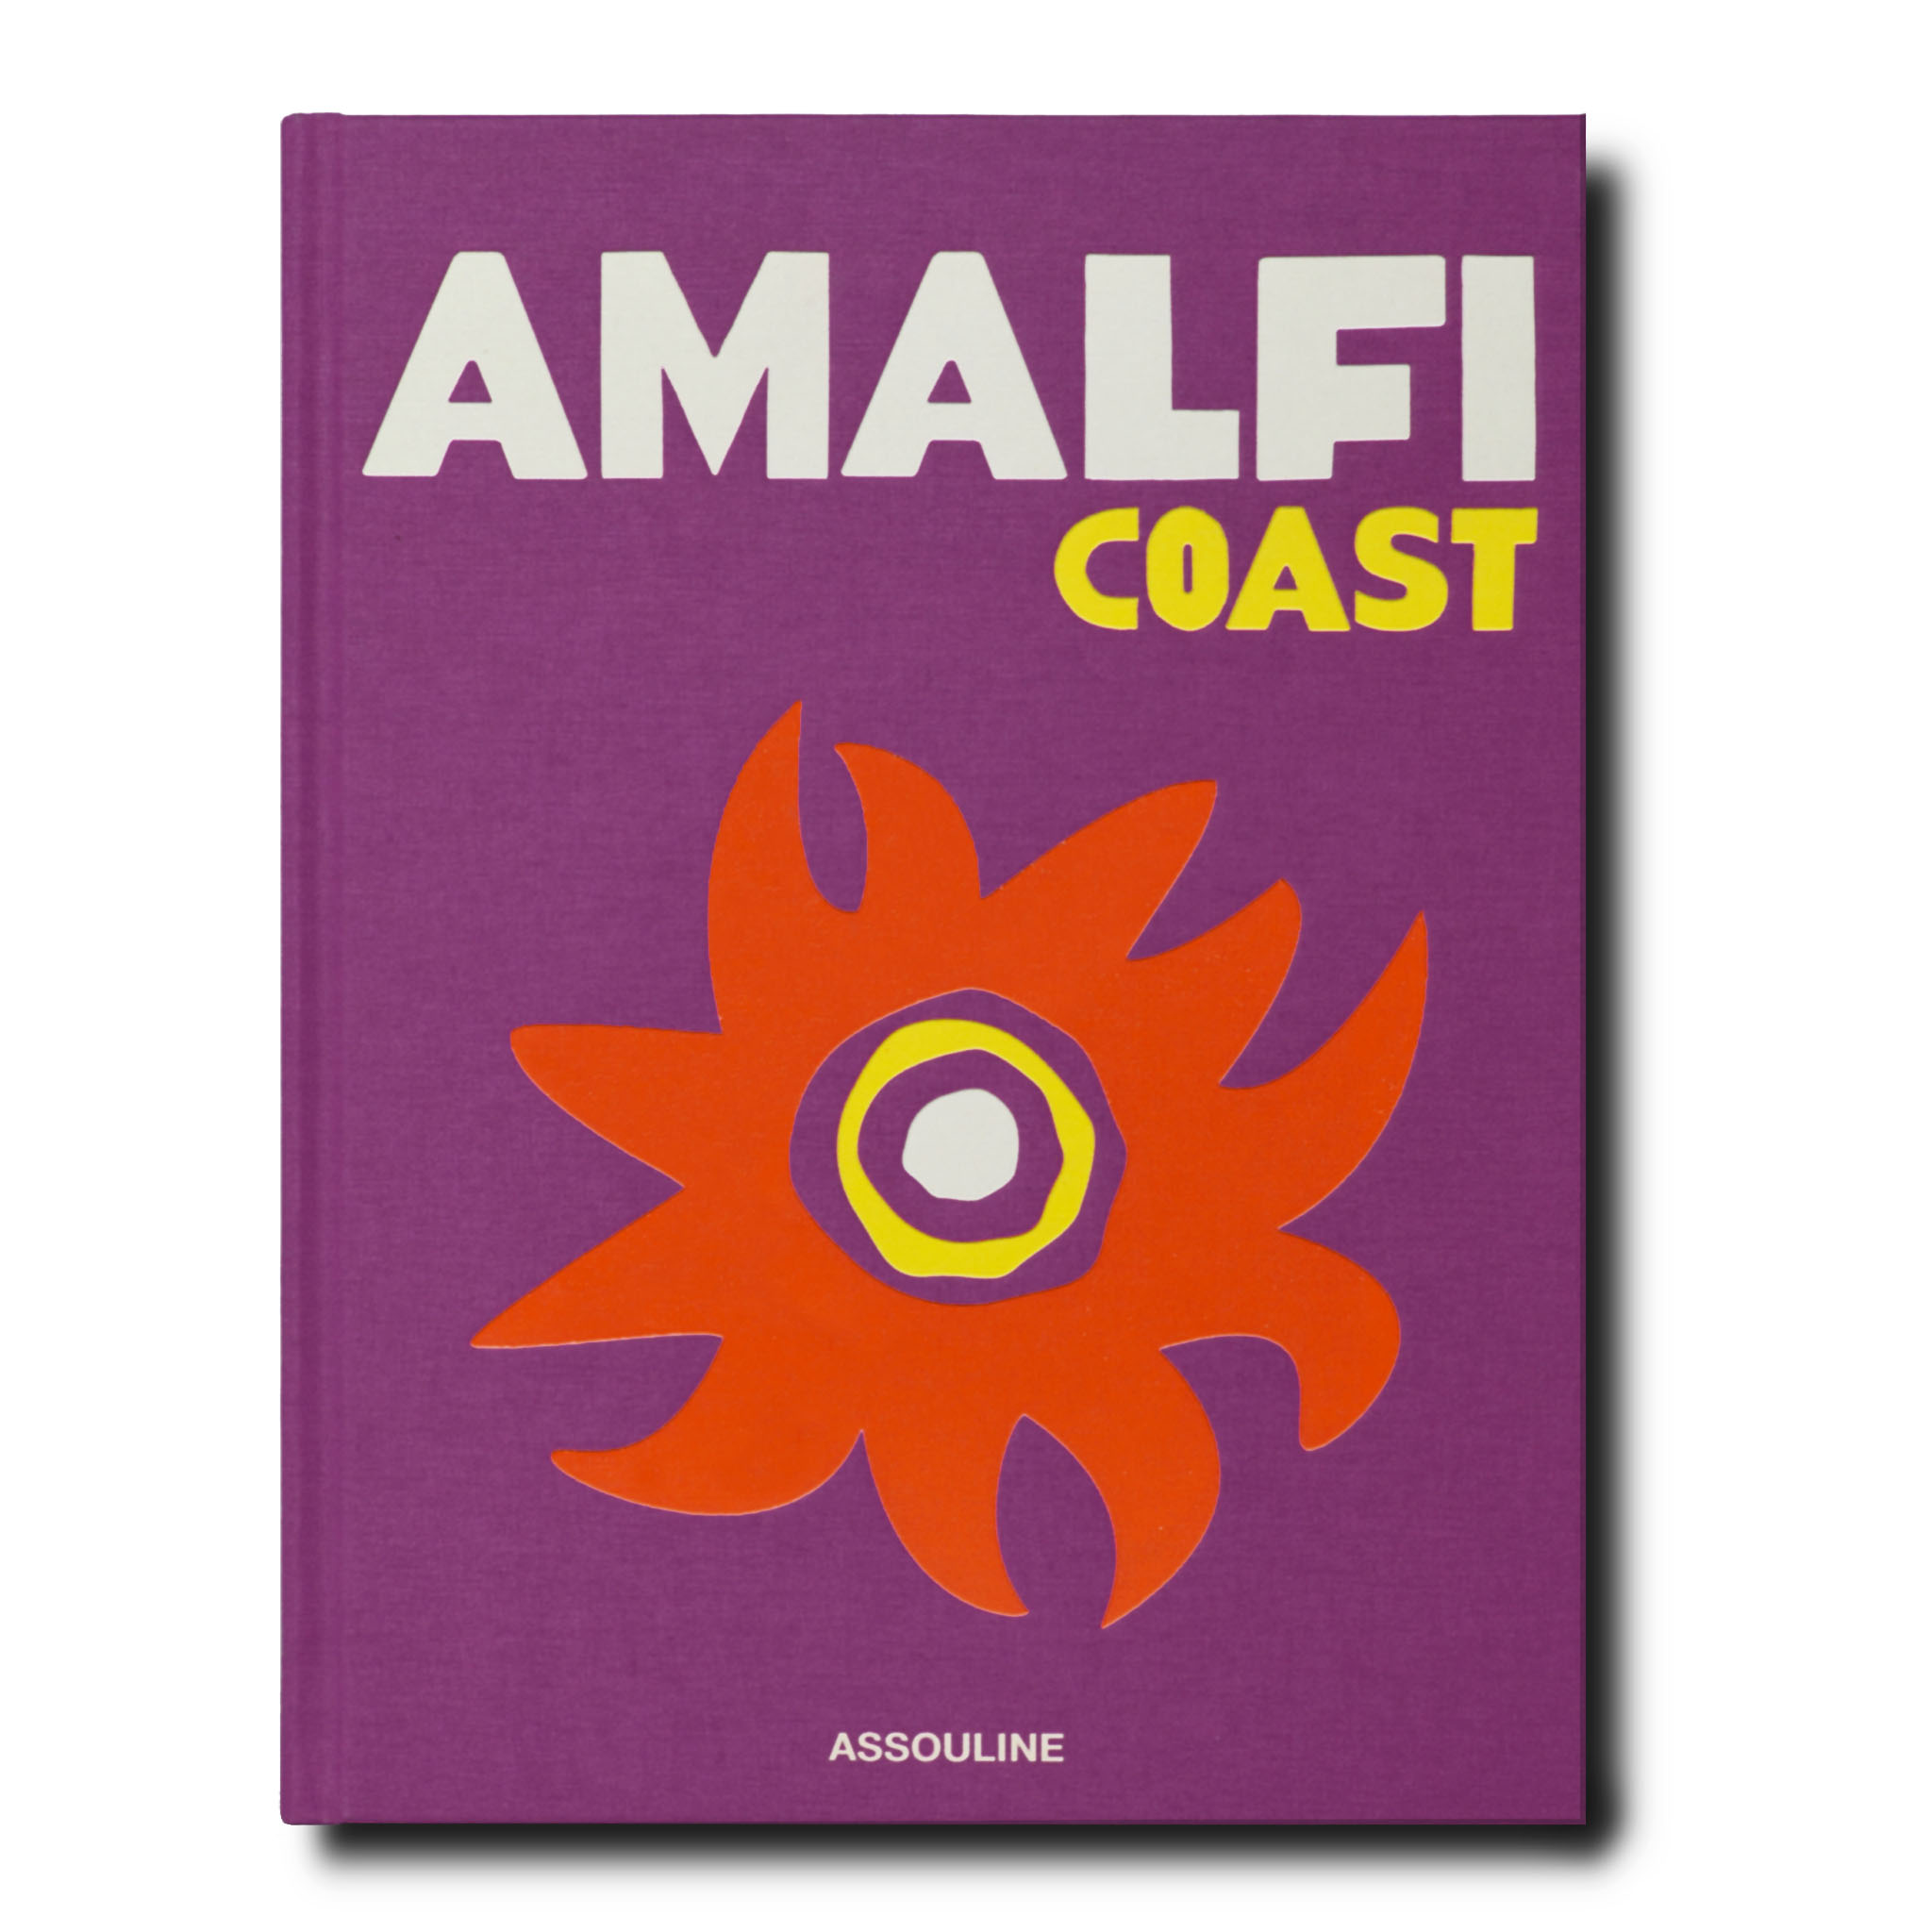 Almafi Coast book